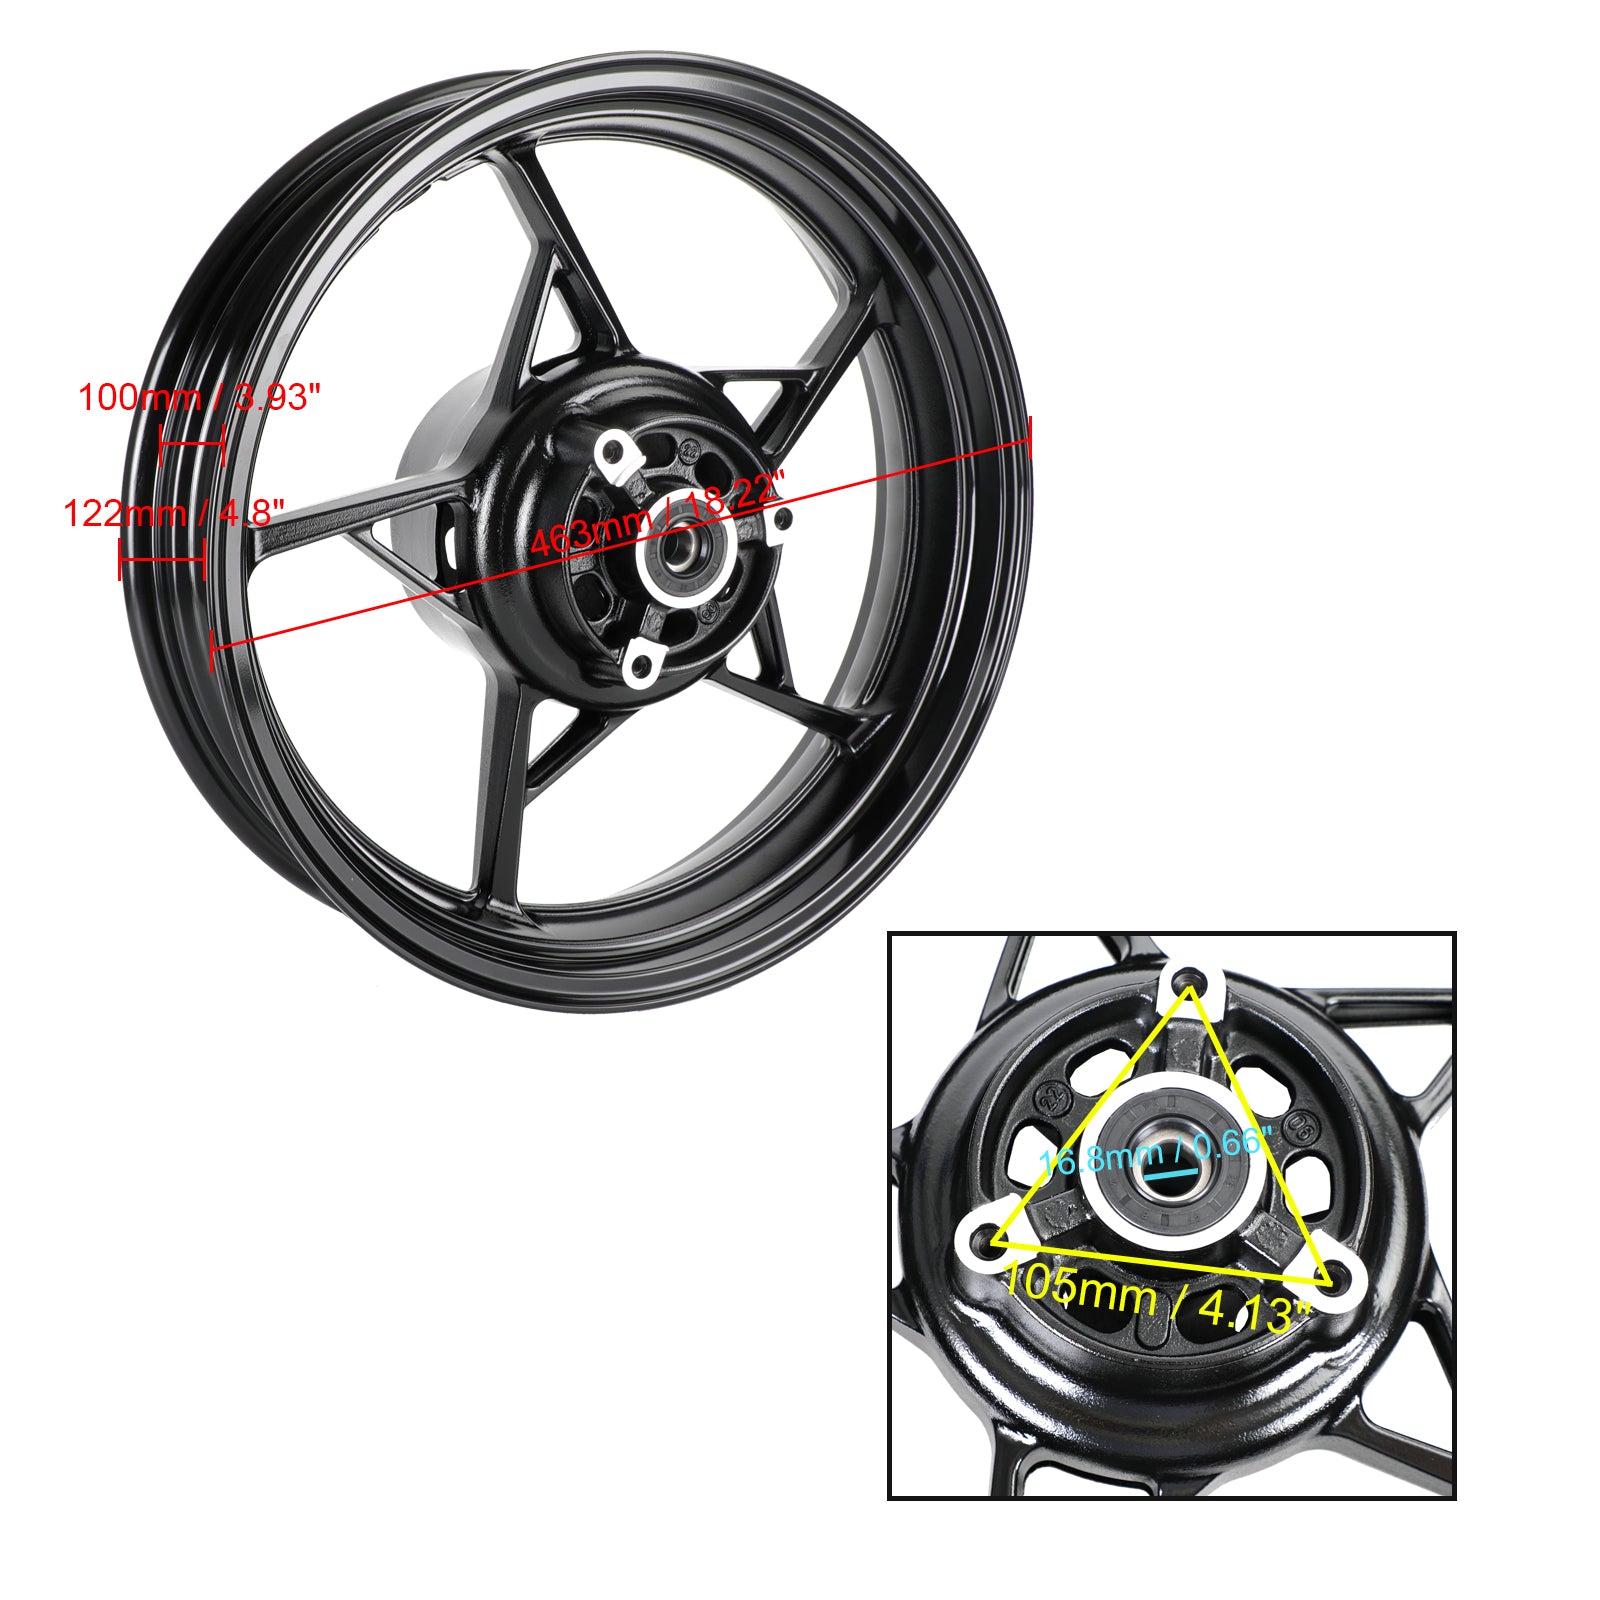 Cerchio ruota posteriore nero per Kawasaki Z400/EX400 Ninja 400/ABS 2018-2022 Generico